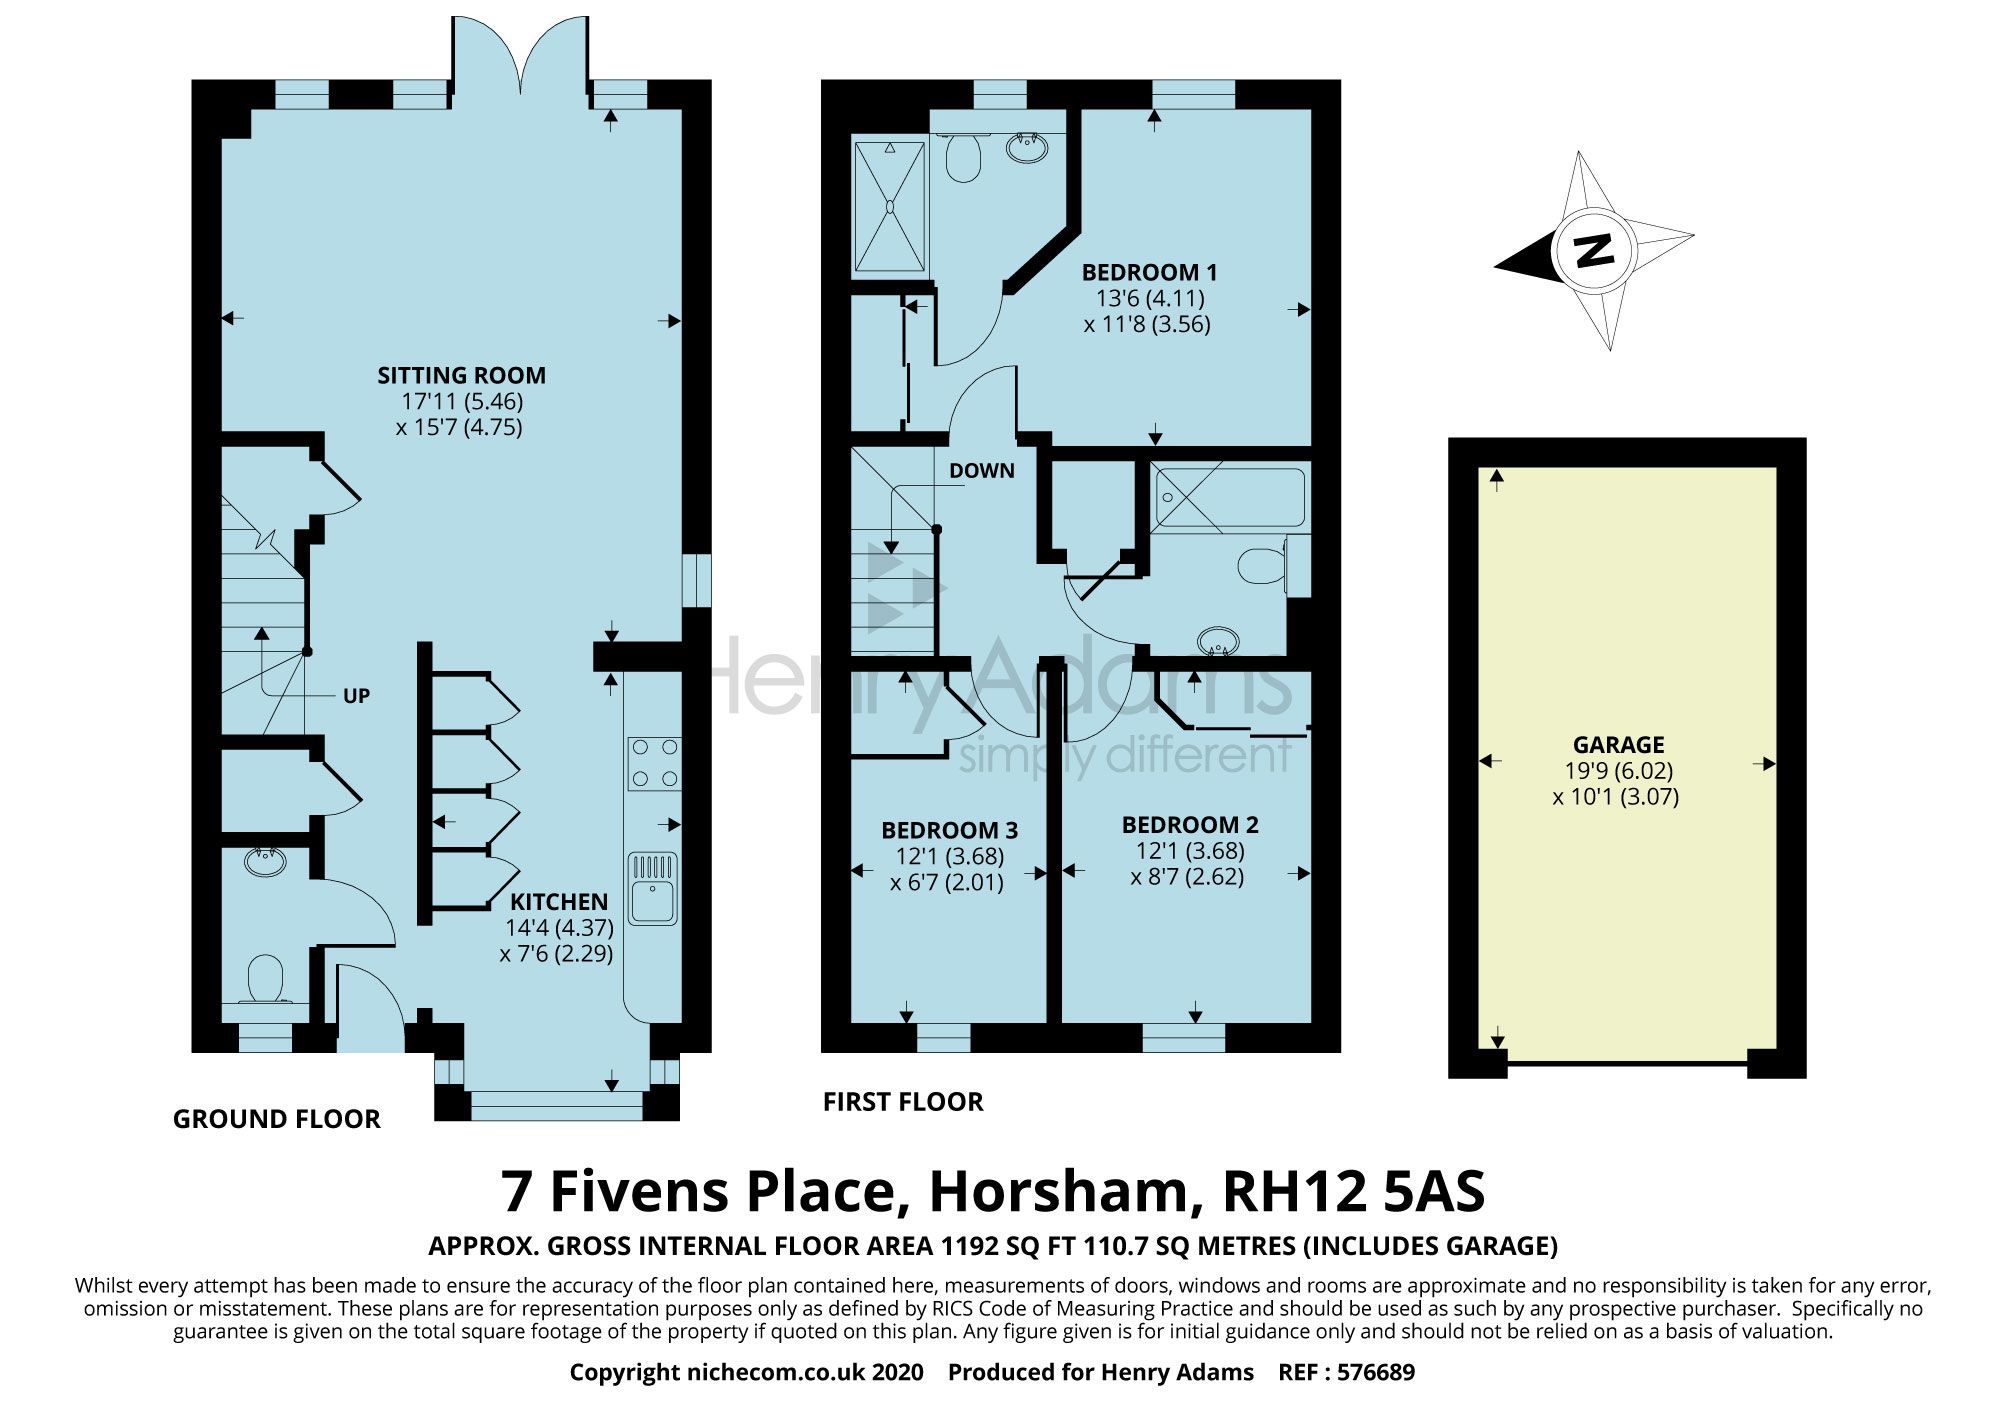 Fivens Place, Horsham, RH12 floorplans